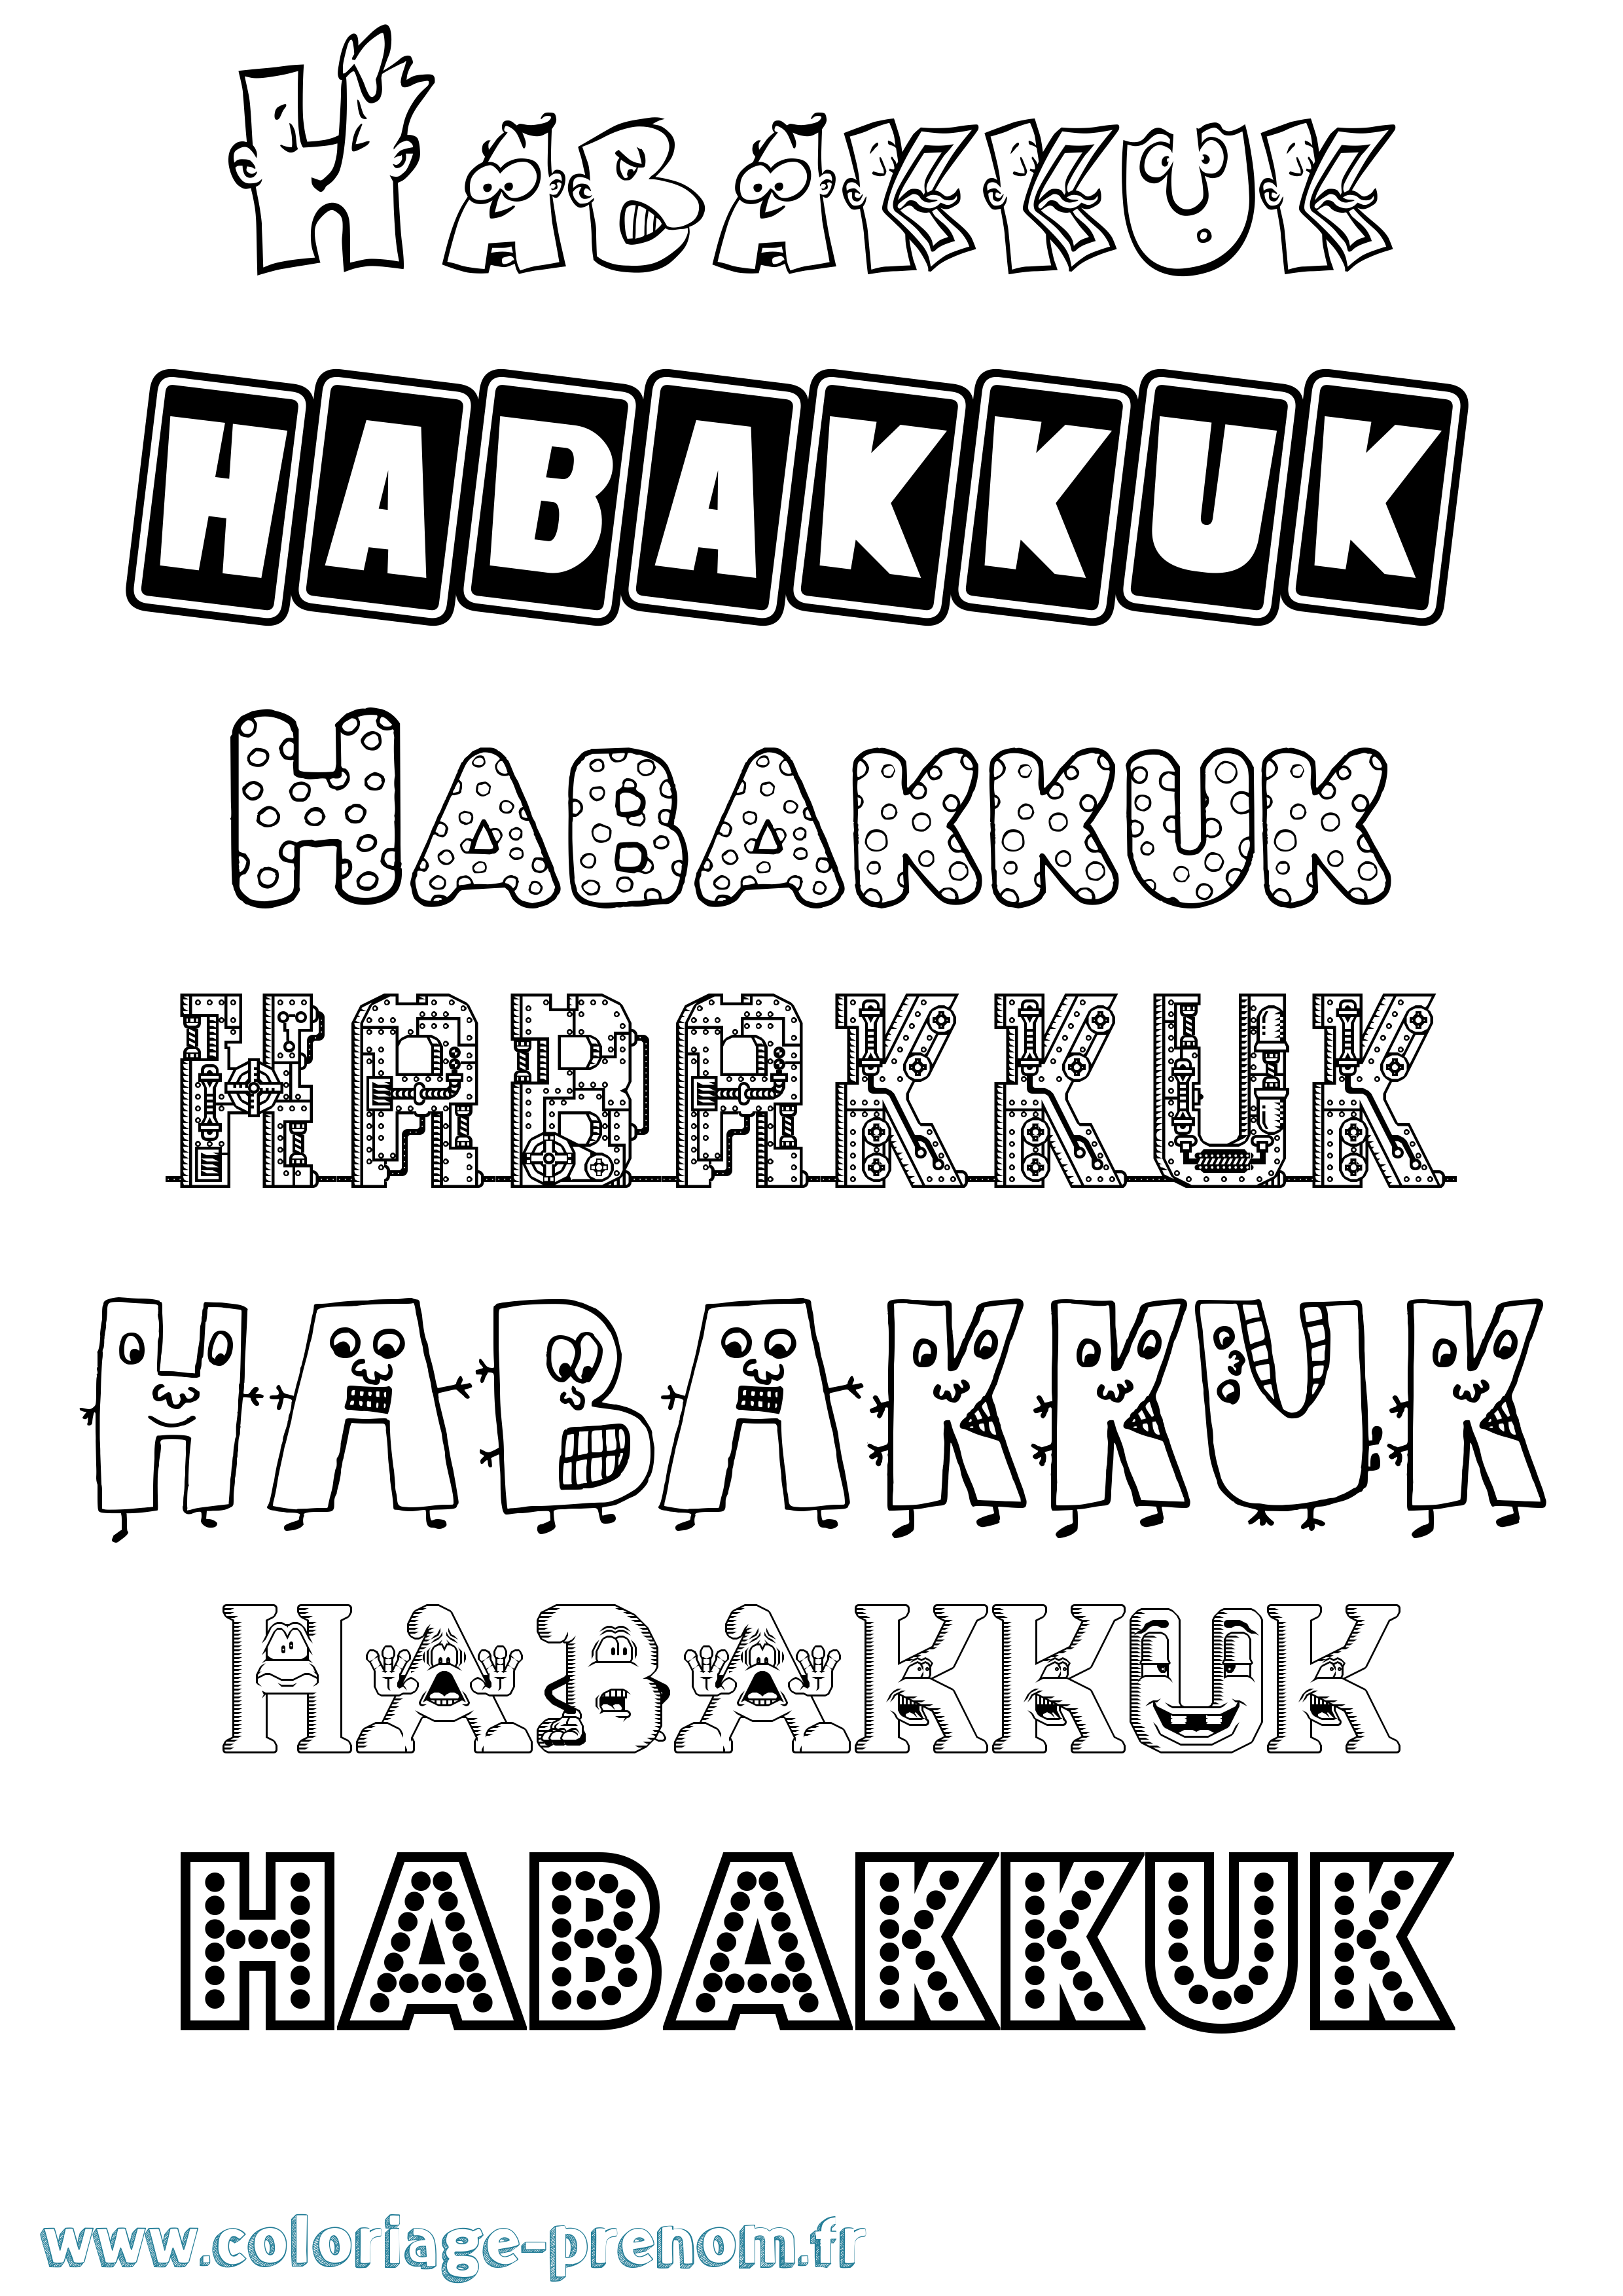 Coloriage prénom Habakkuk Fun